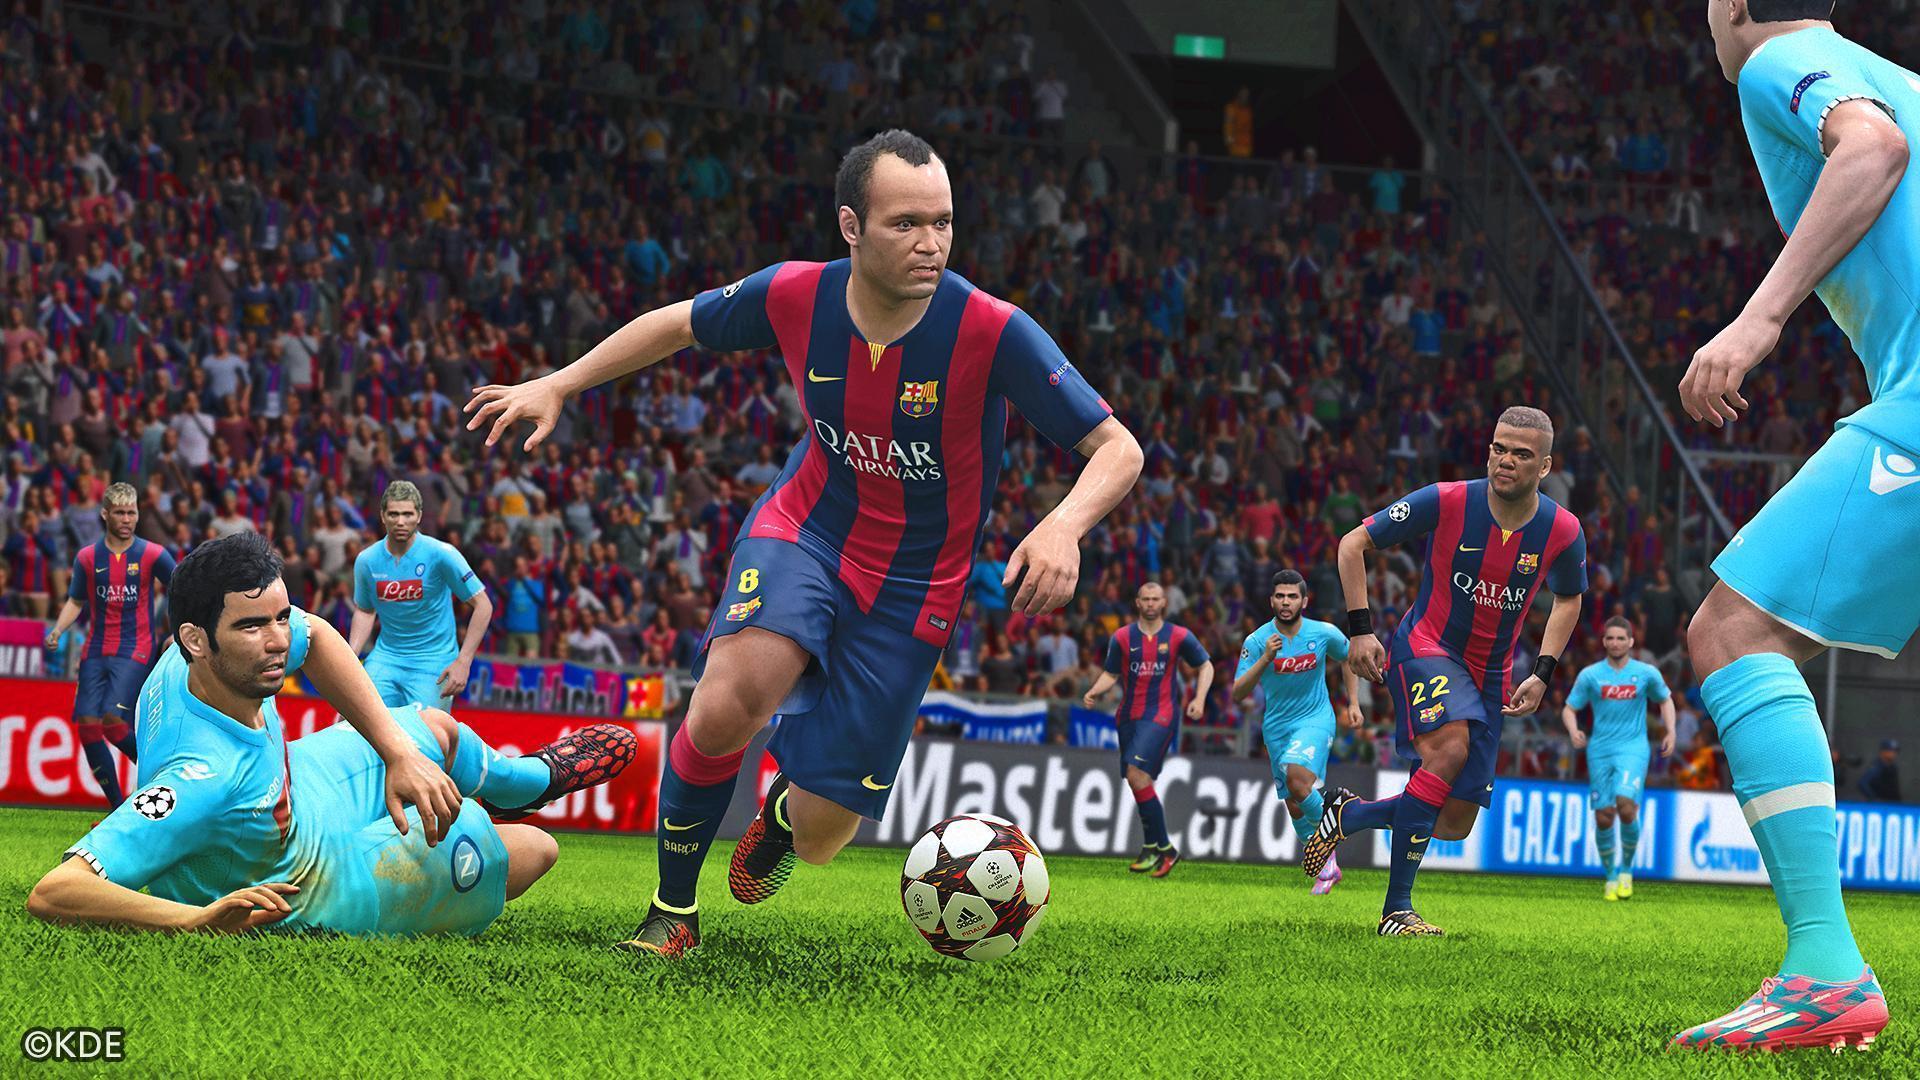 Pro Evolution Soccer 2015: Free PES 2015 DLC adds four teams